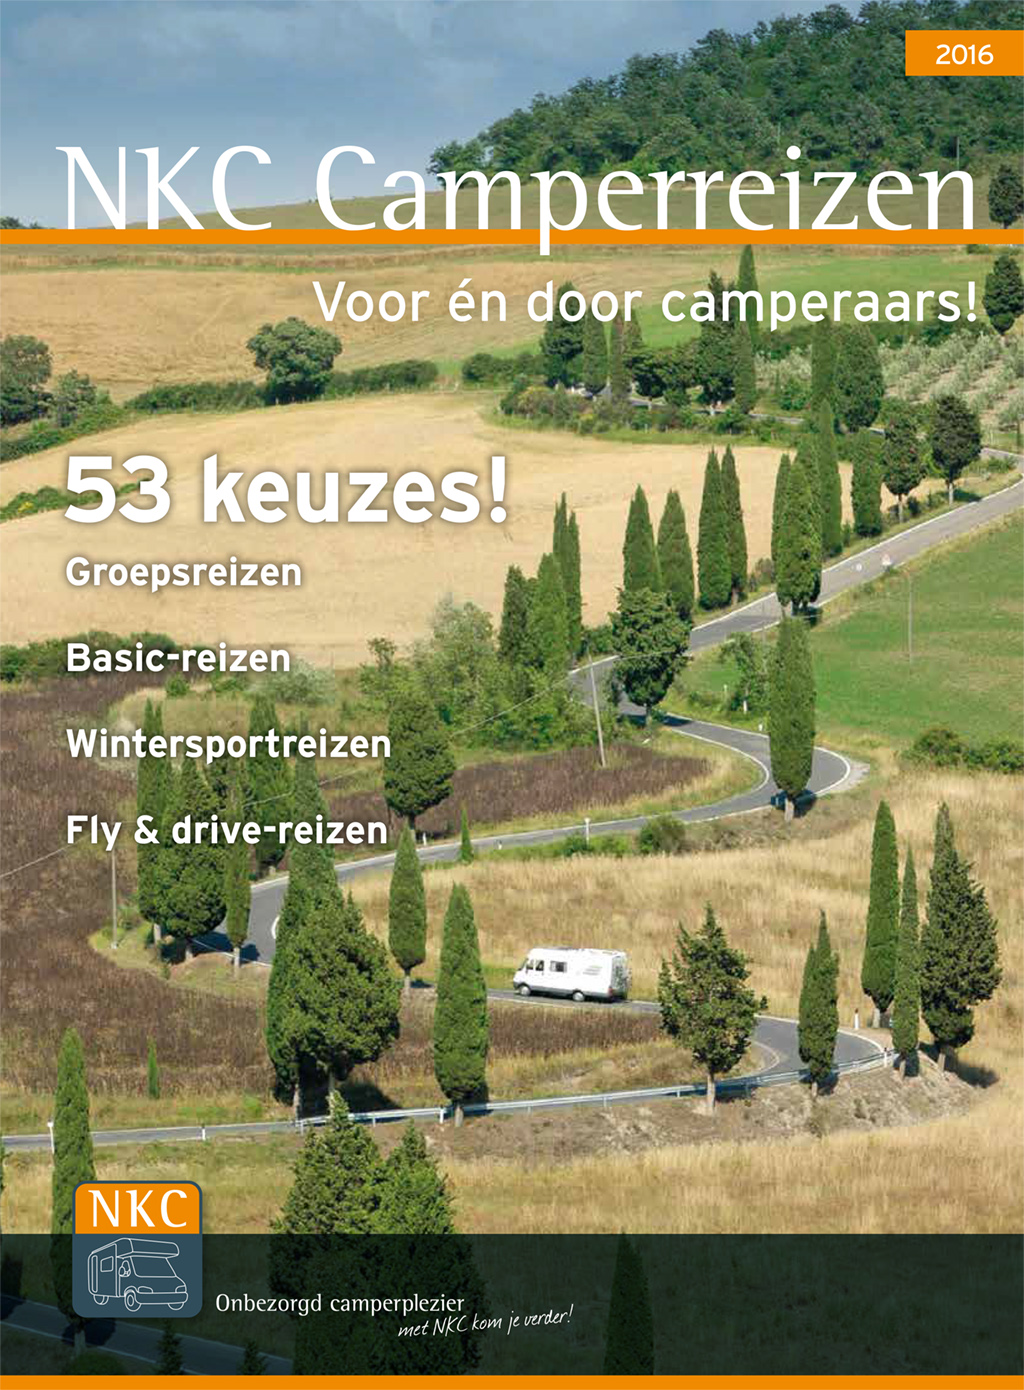 Camperreizen202016 Cover 1 